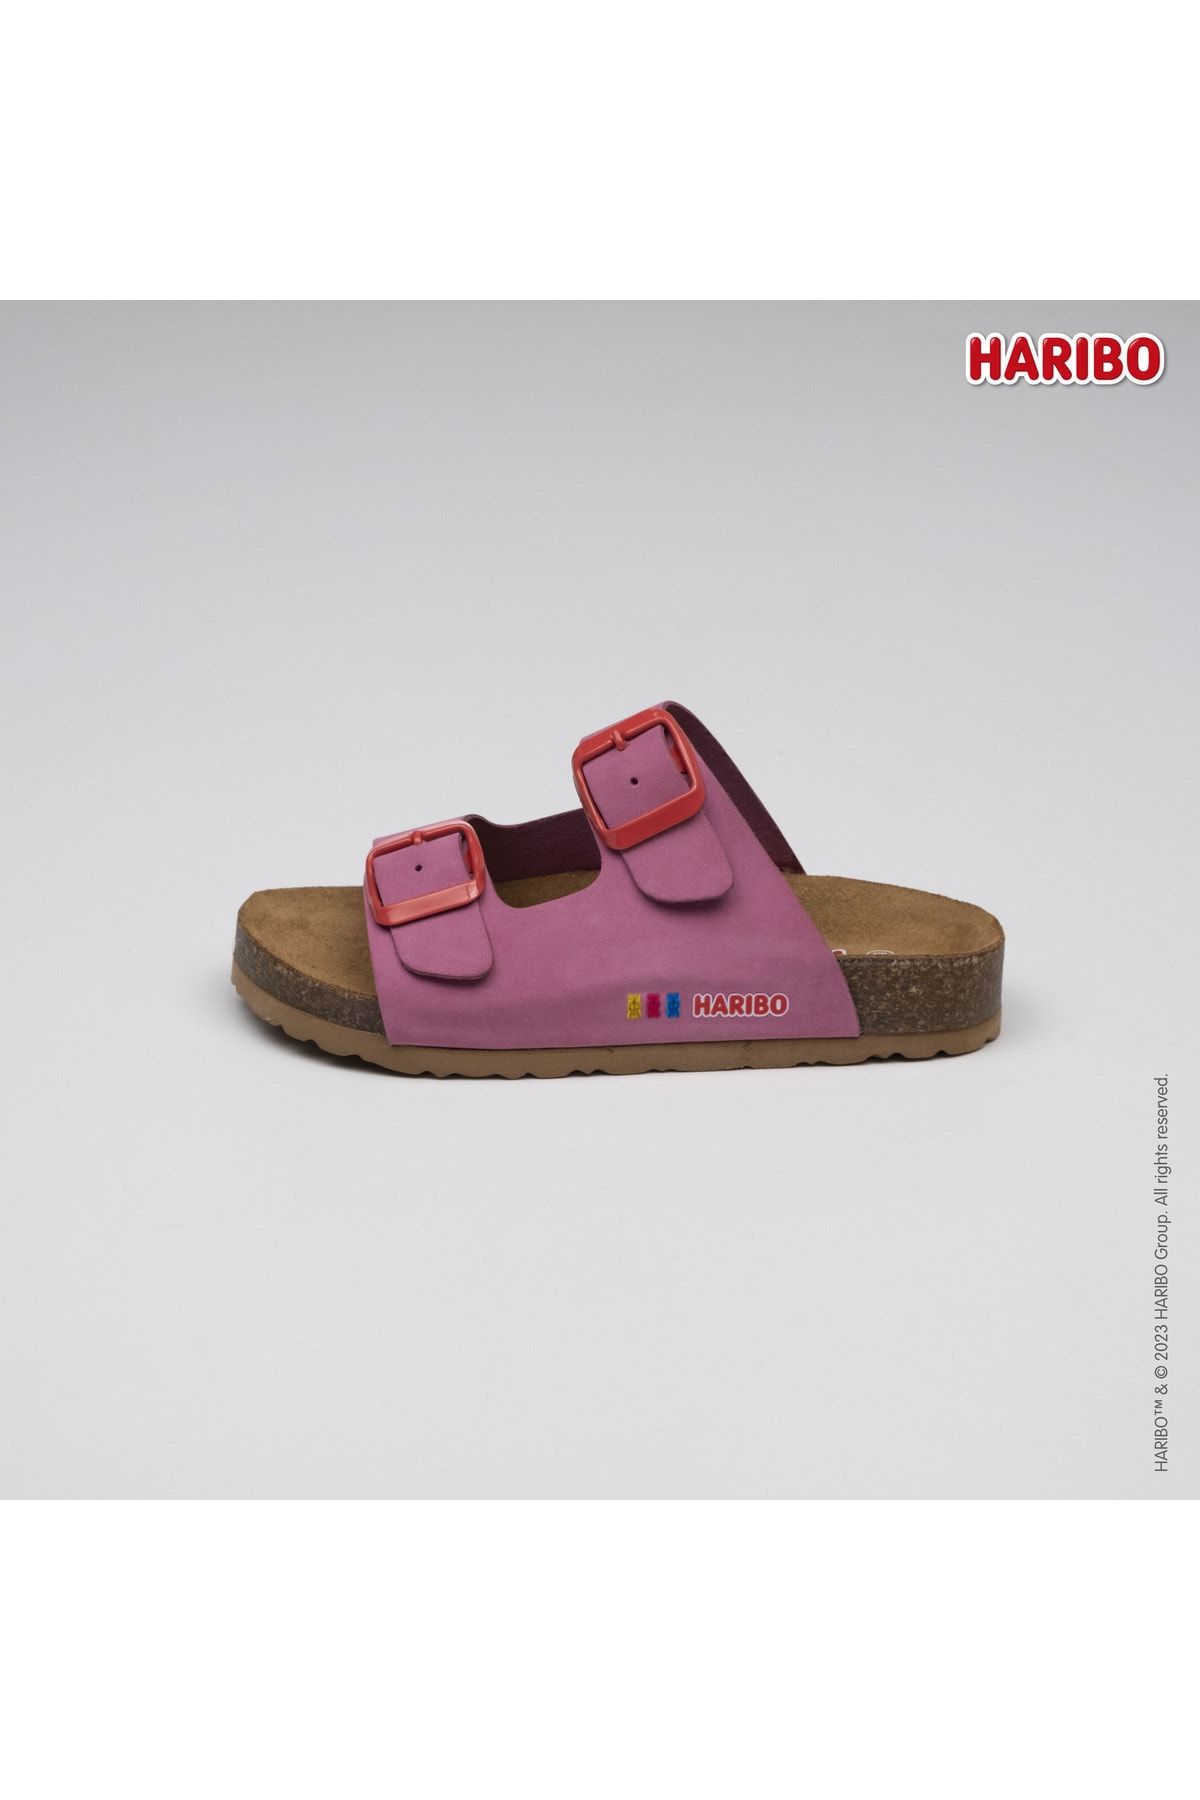 Haribo Double Buckled Sandalet